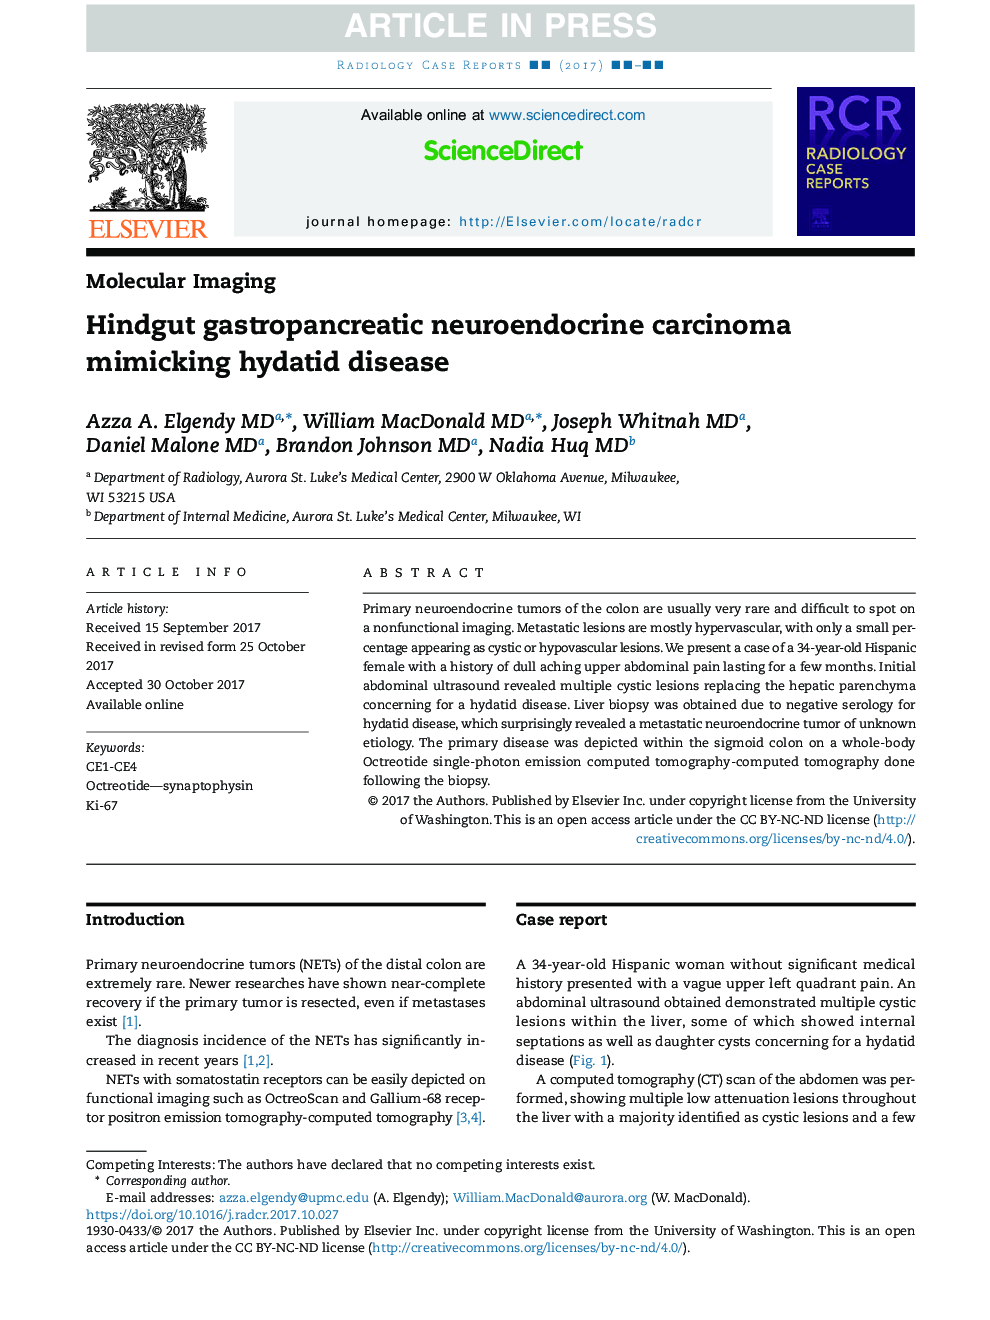 Hindgut gastropancreatic neuroendocrine carcinoma mimicking hydatid disease